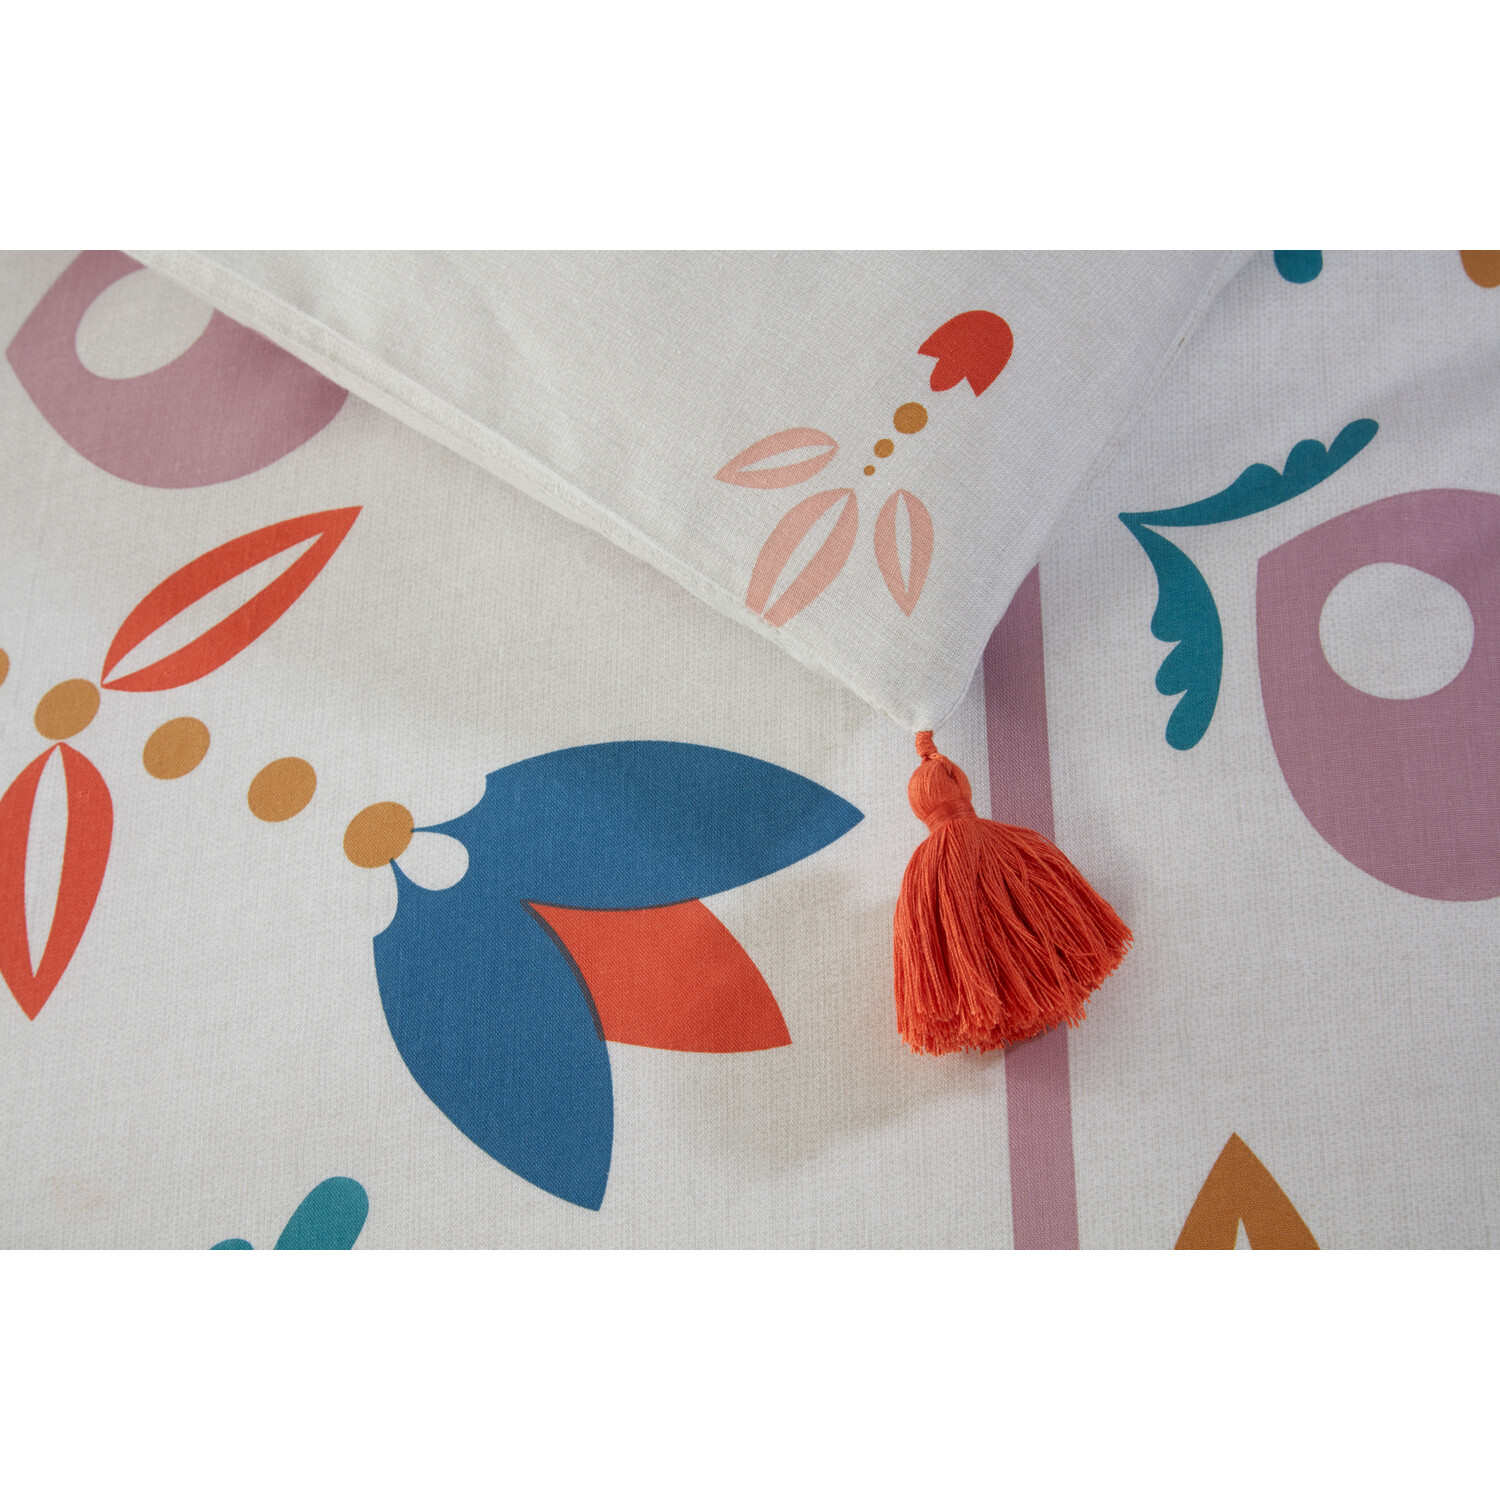 Amari Floral Duvet Cover and Pillowcase Set - Superking Image 7